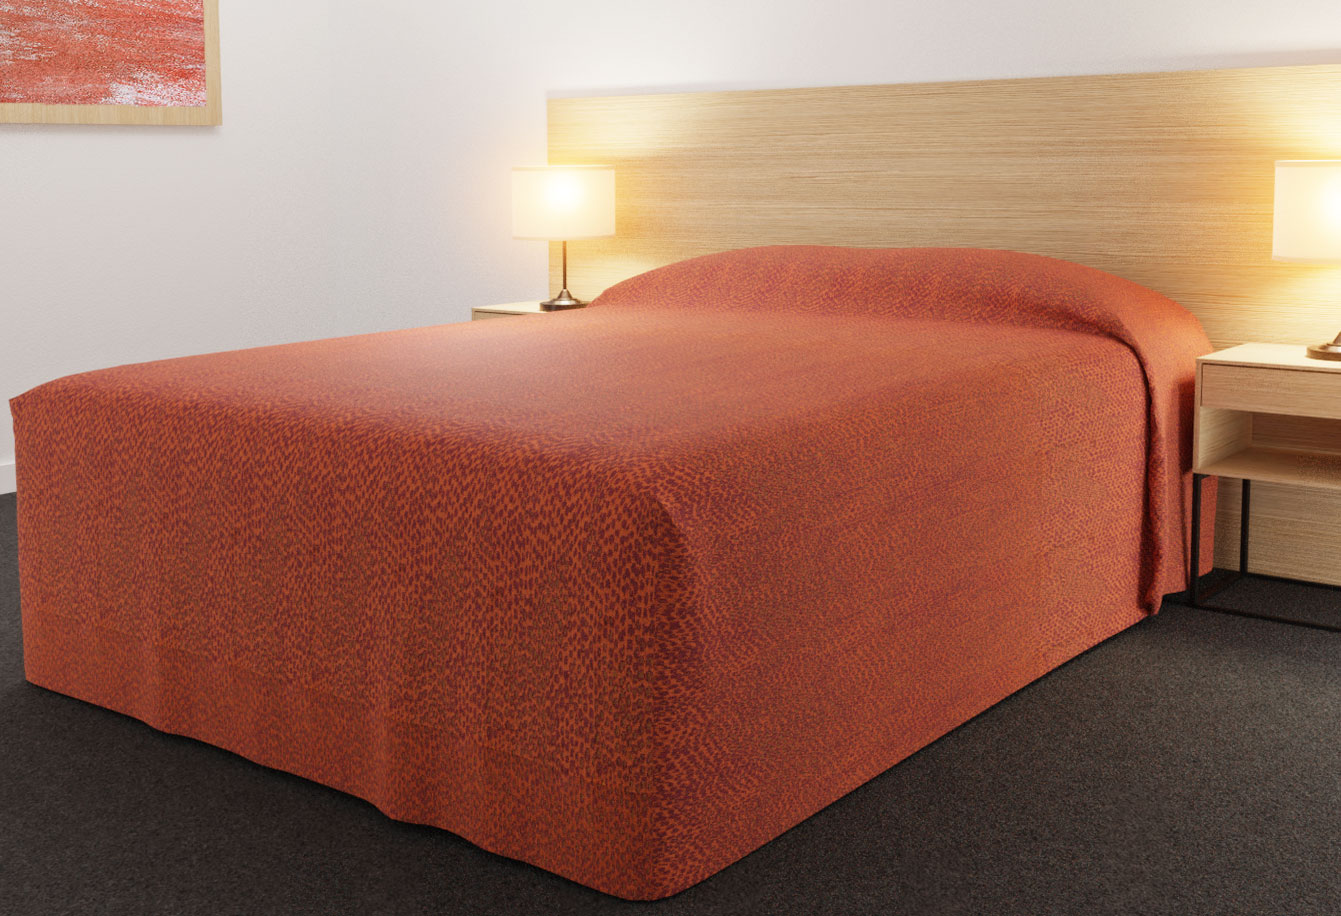 tango bed mattress inserts